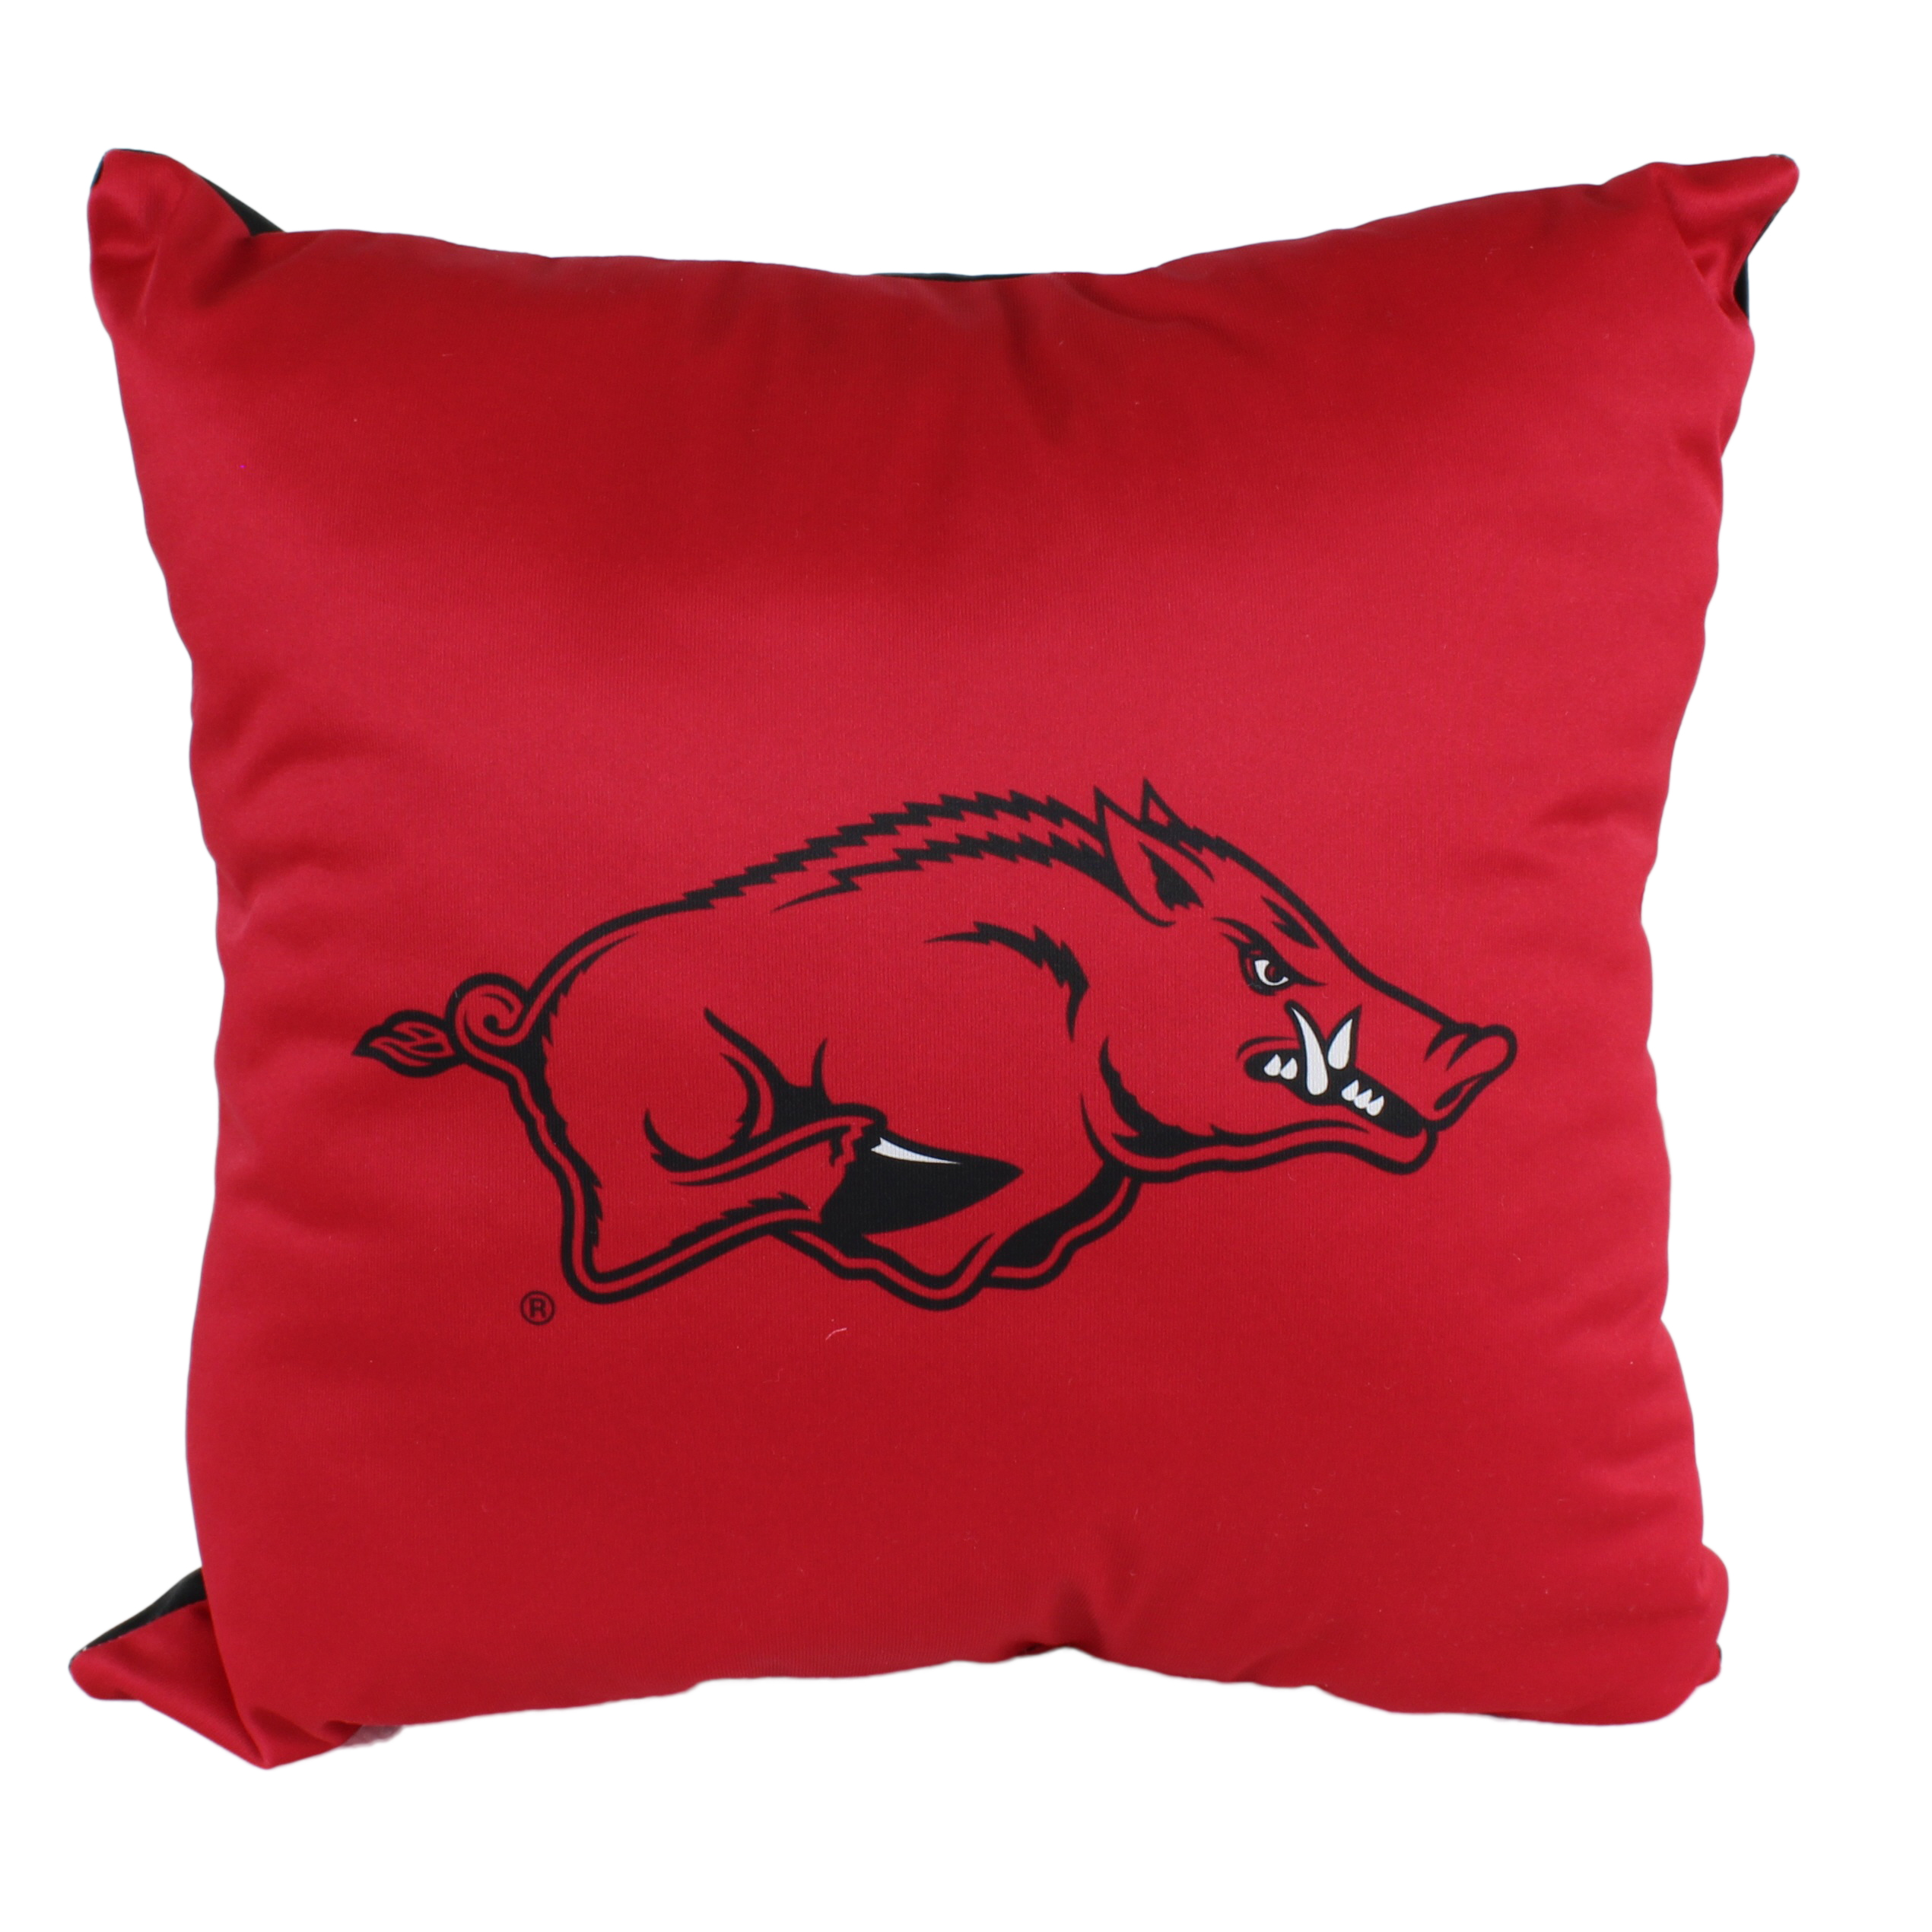 Arkansas Razorbacks 16 inch Reversible Decorative Pillow - image 1 of 4